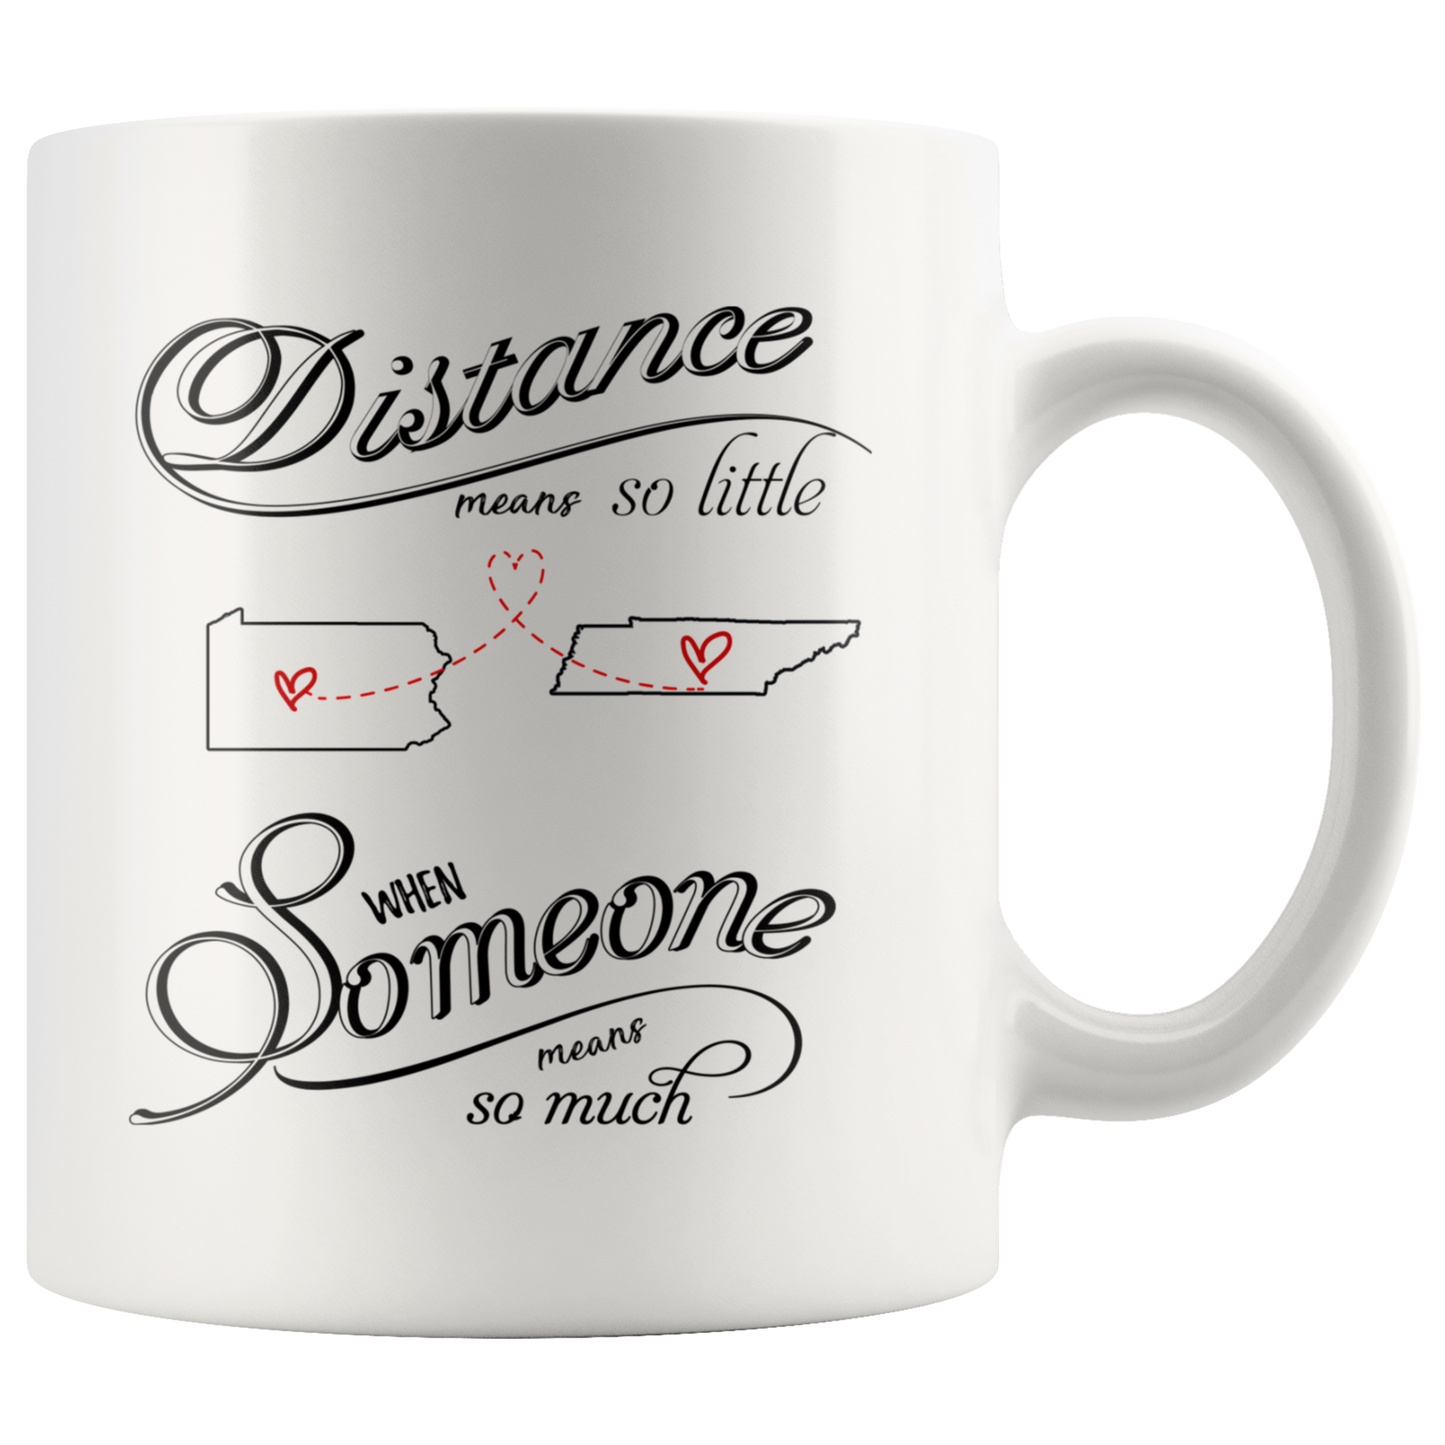 M-20484909-sp-26297 - [ Pennsylvania | Tennessee ] (mug_11oz_white) Mothers Day Coffee Mug Pennsylvania Tennessee Distance Means